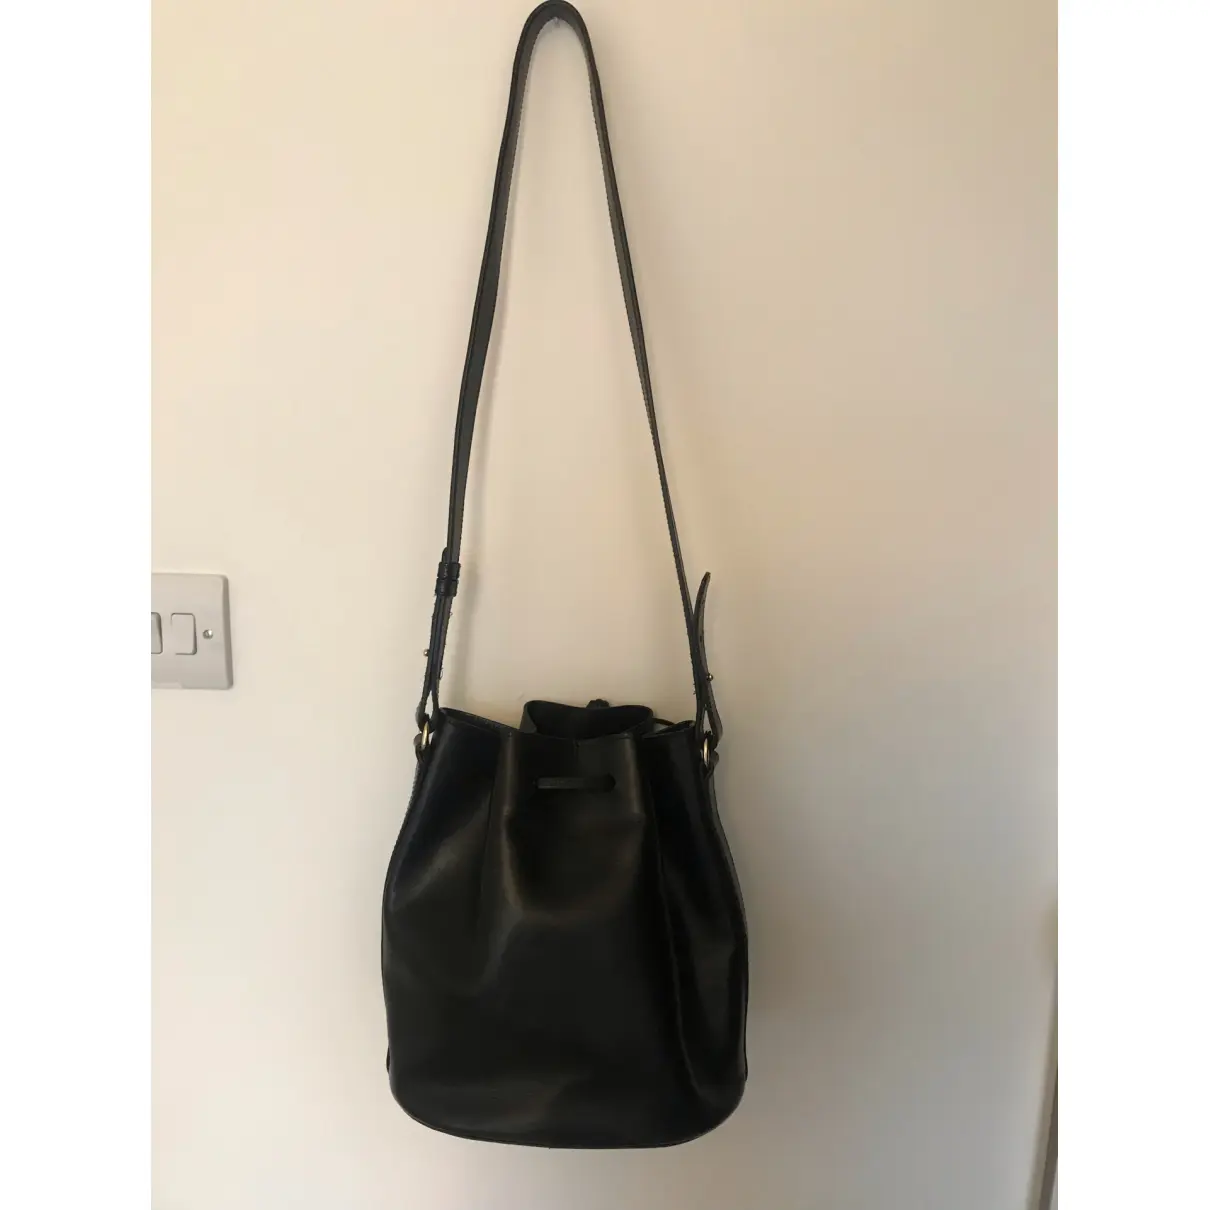 Buy Sézane Farrow leather handbag online